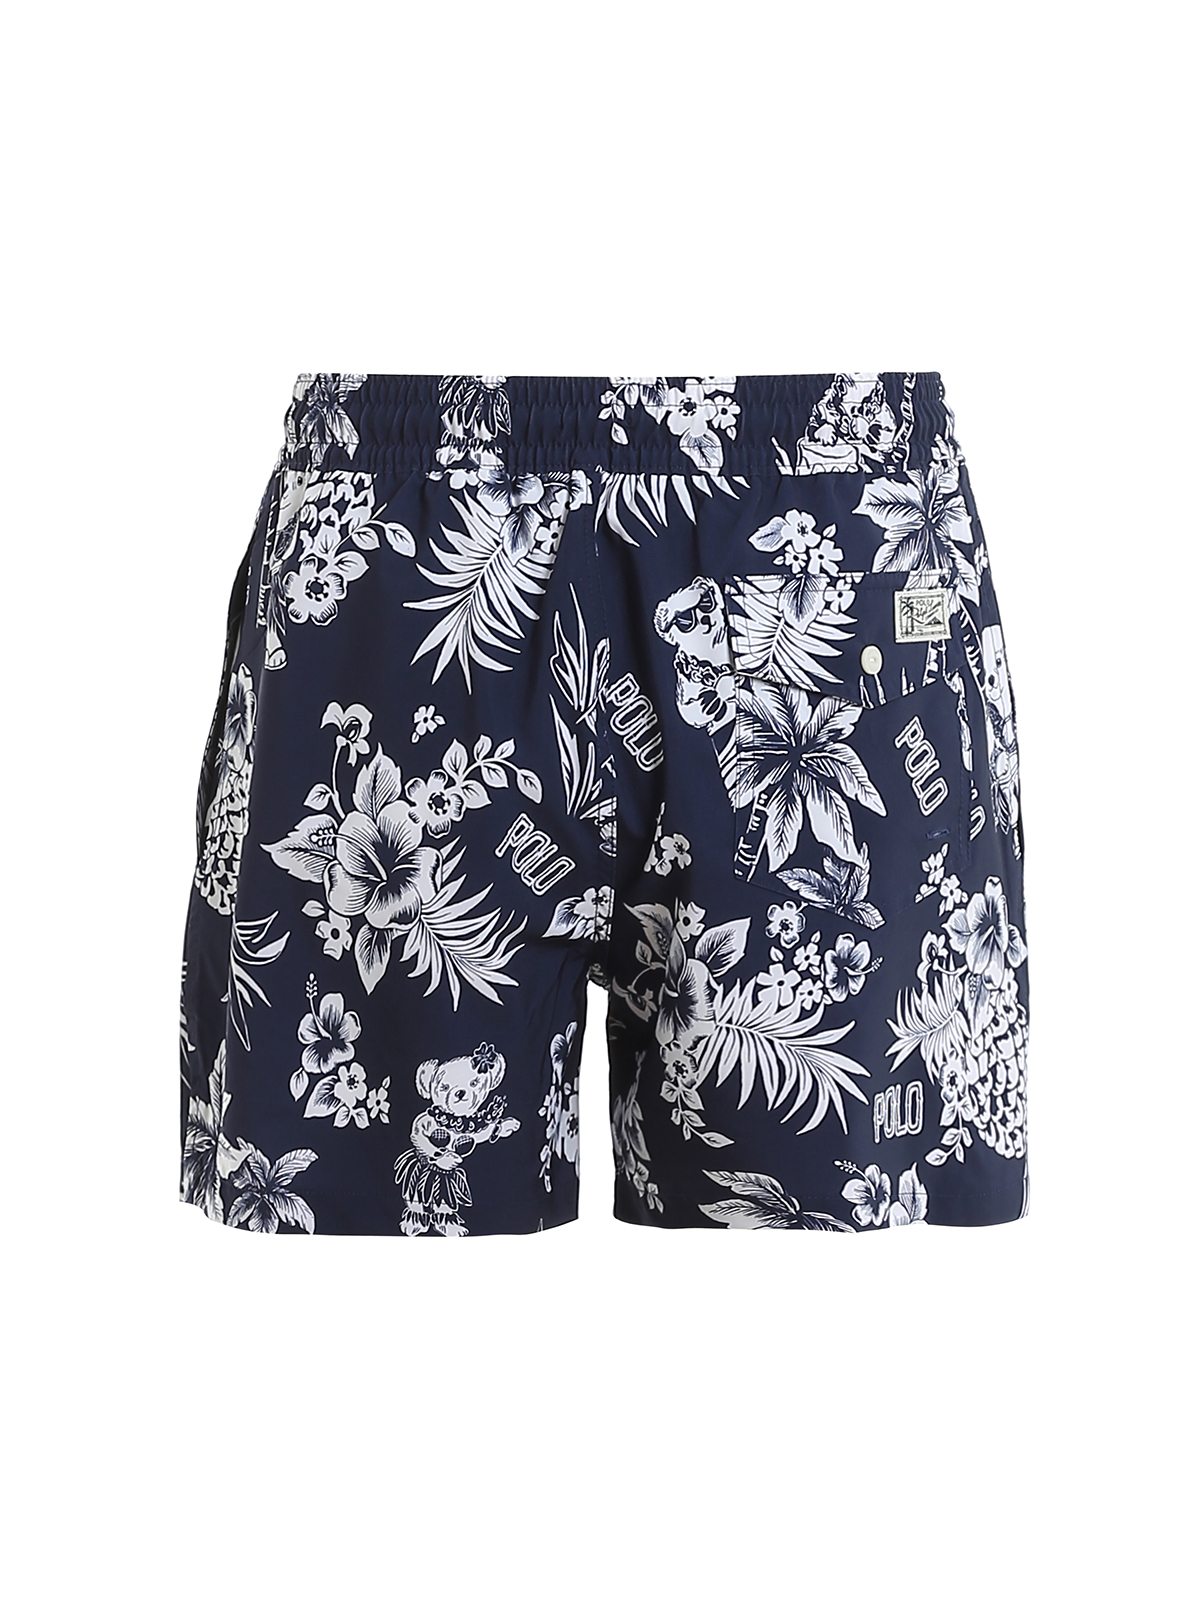 grey ralph lauren swim shorts